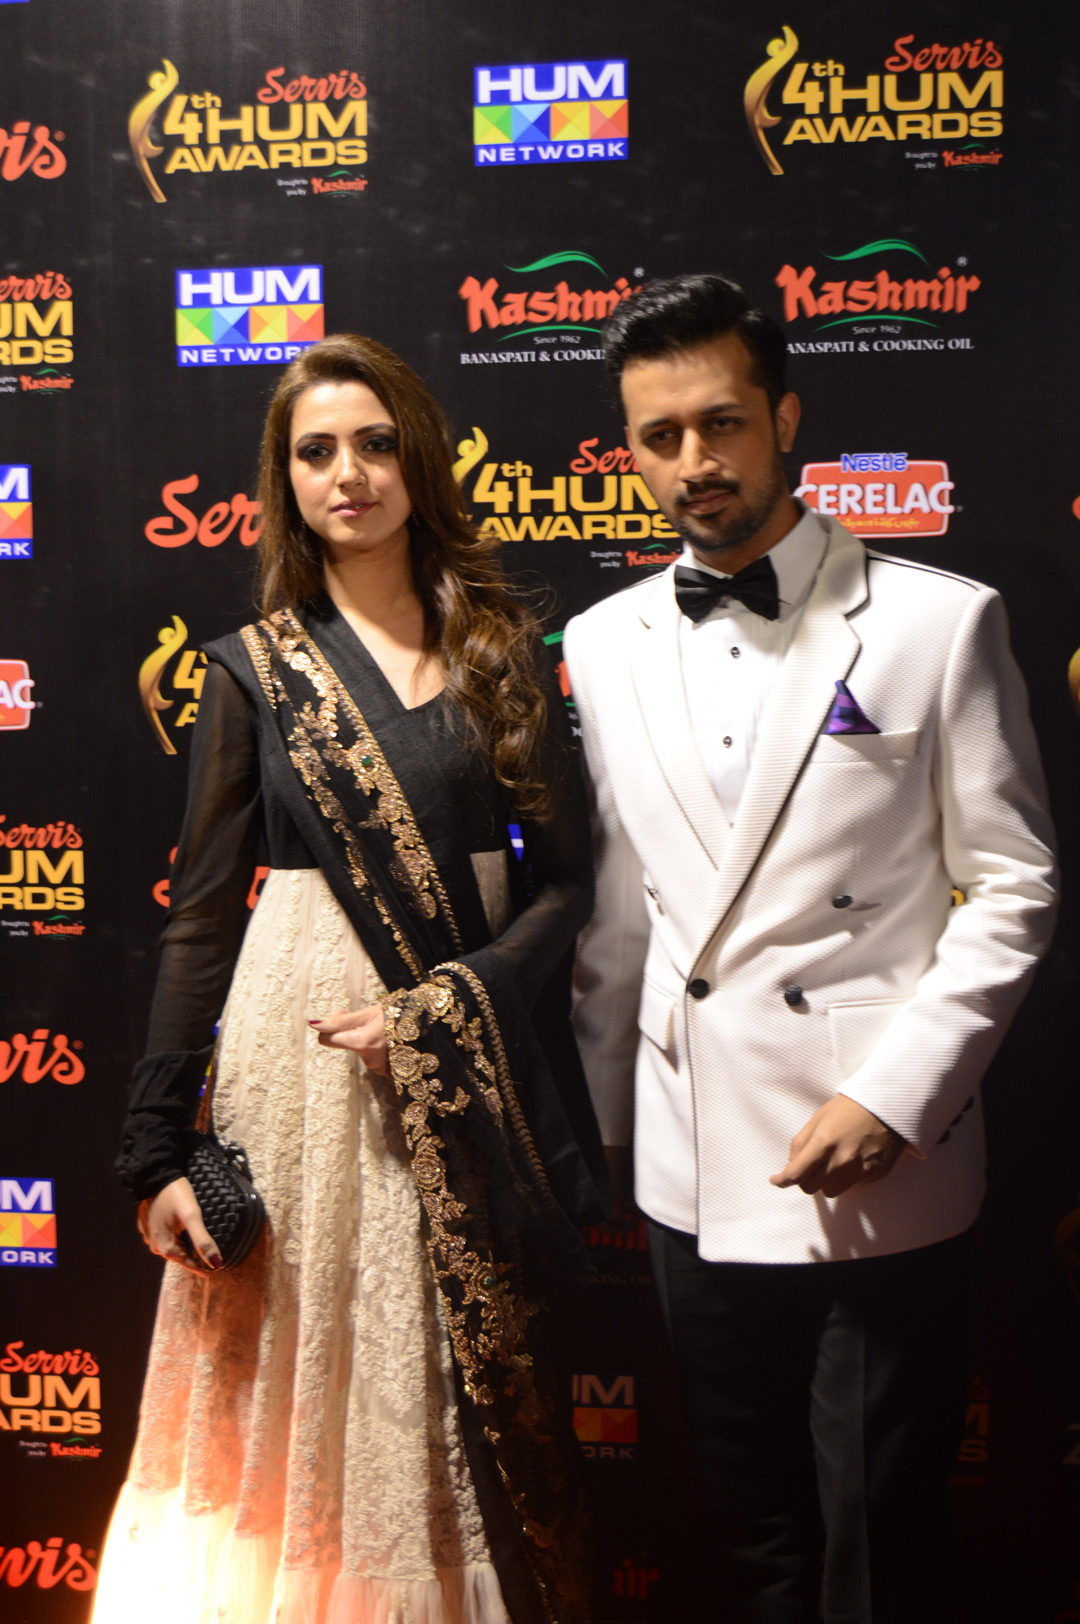 Atif Aslam with his wife HUM Awards Red Carpet